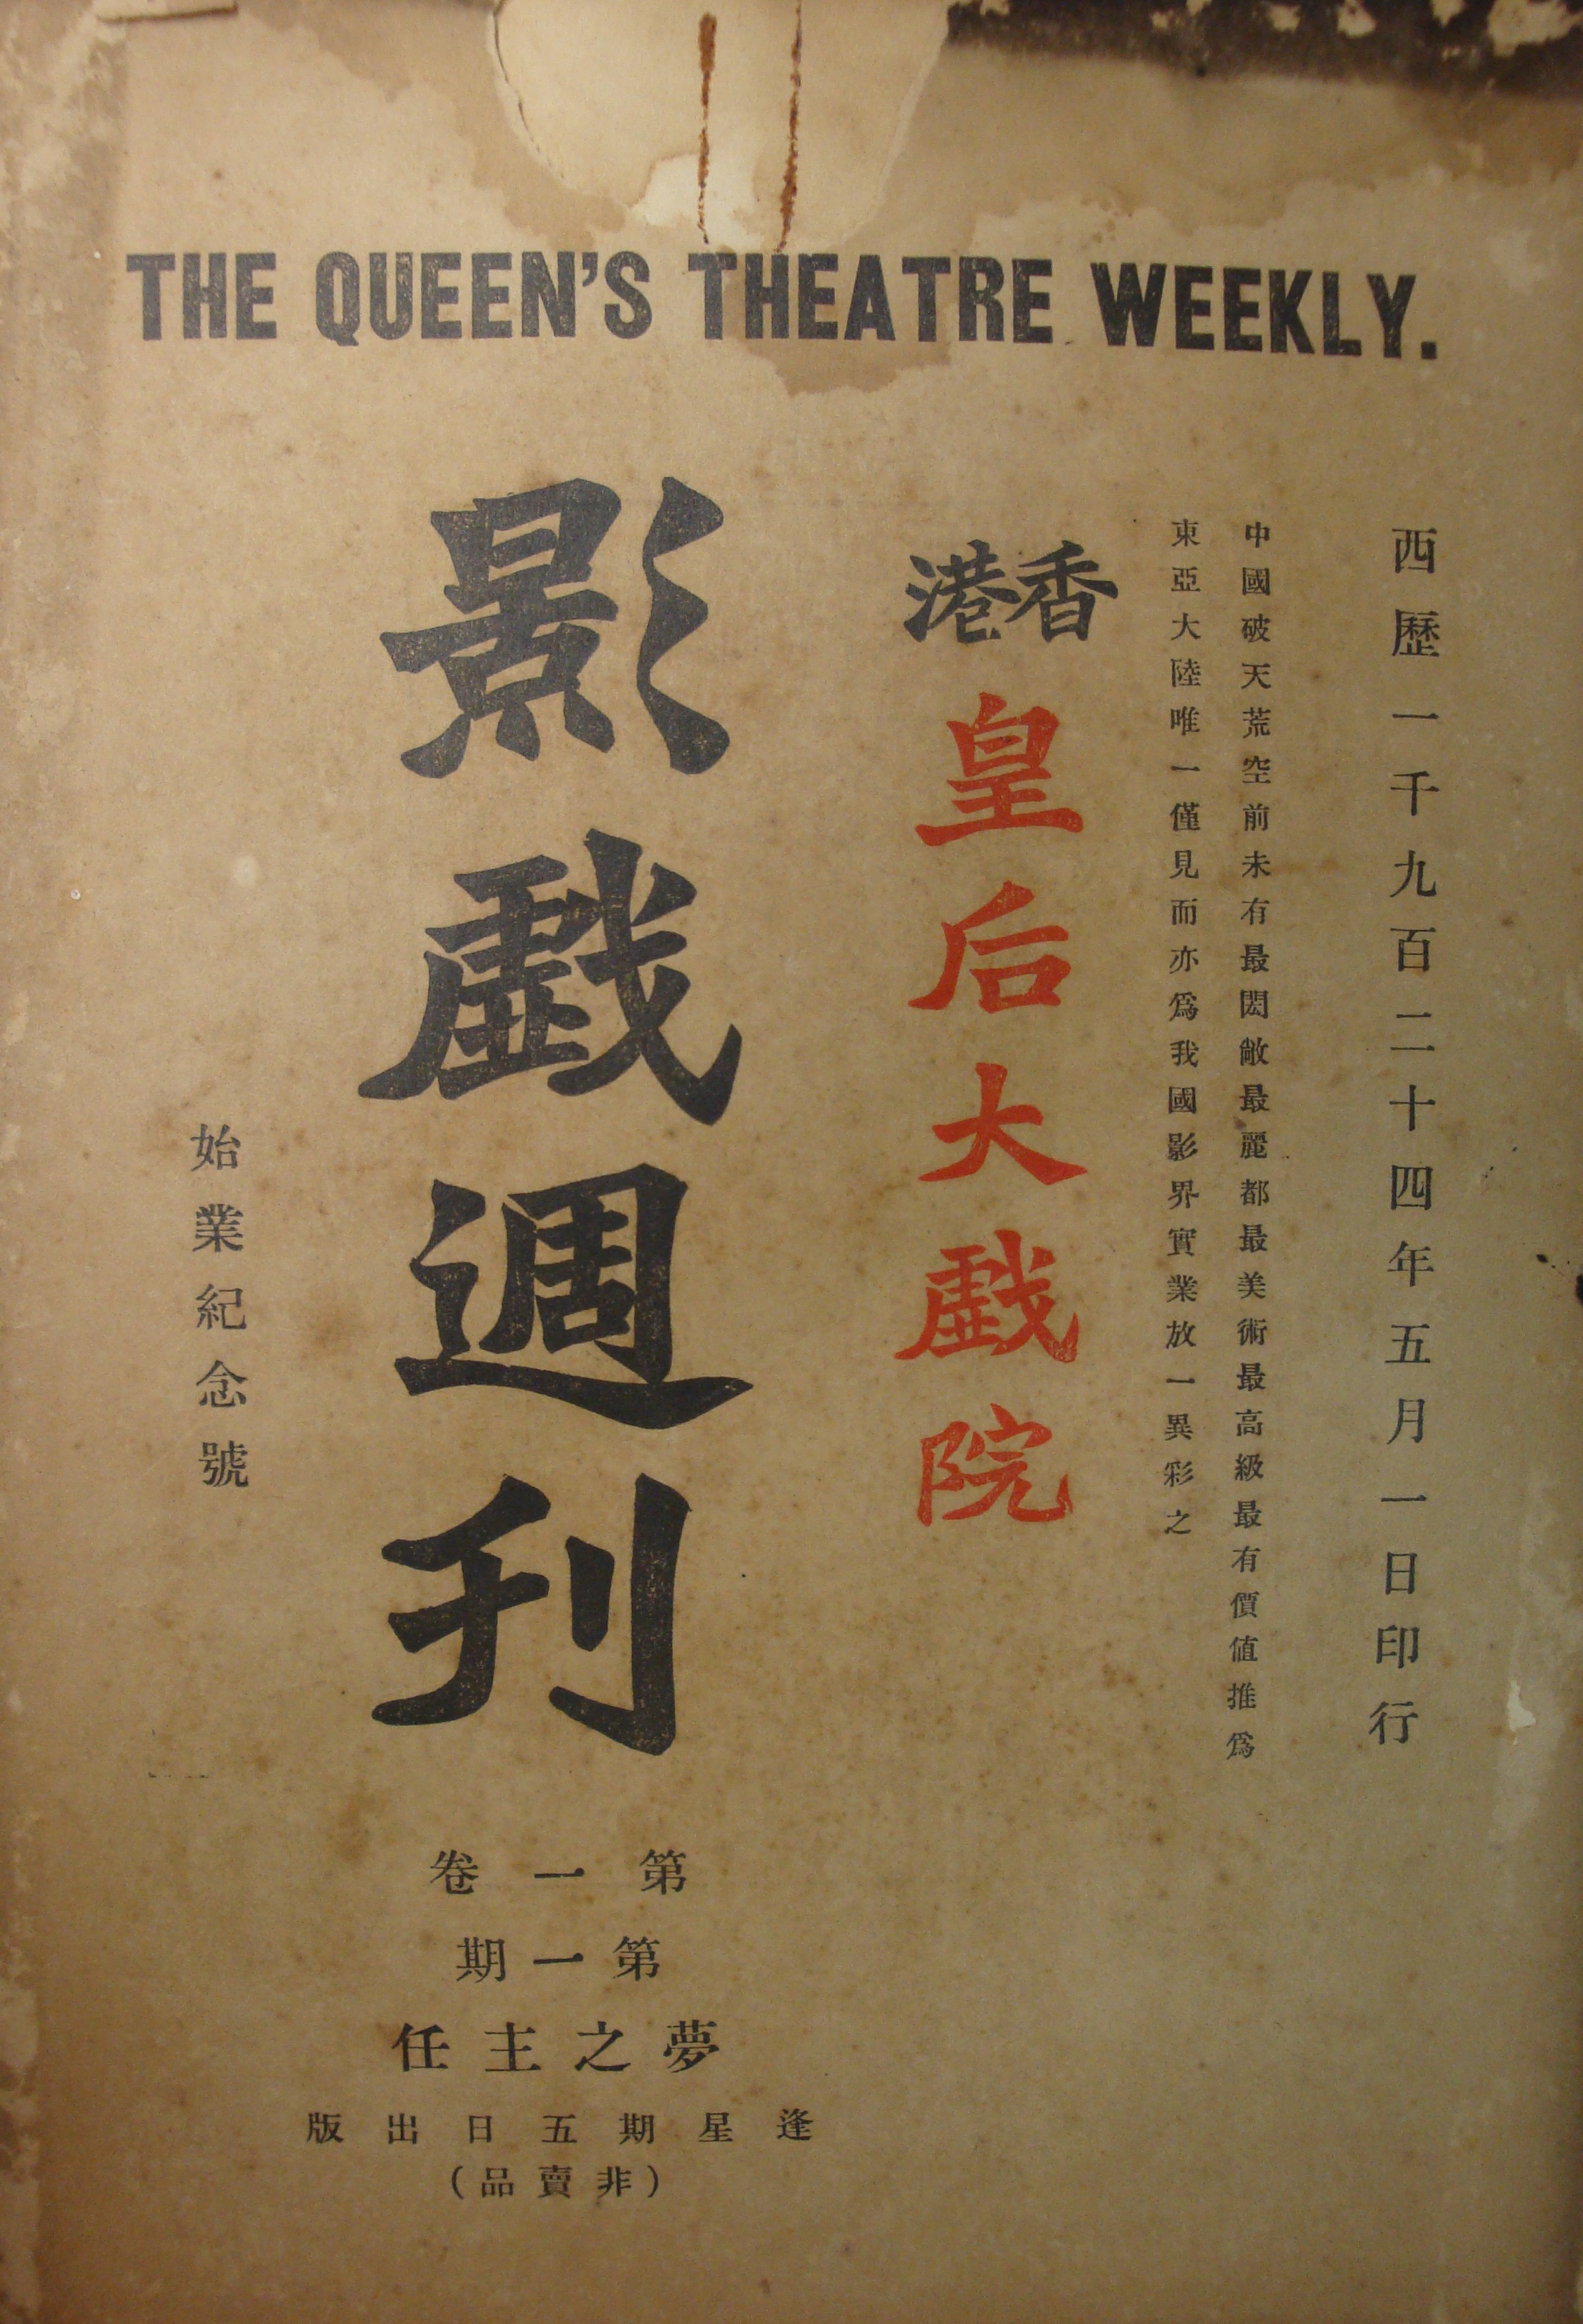 香港皇后大戲院 : 影戲週刊 (The Queen's Theatre weekly) 1924